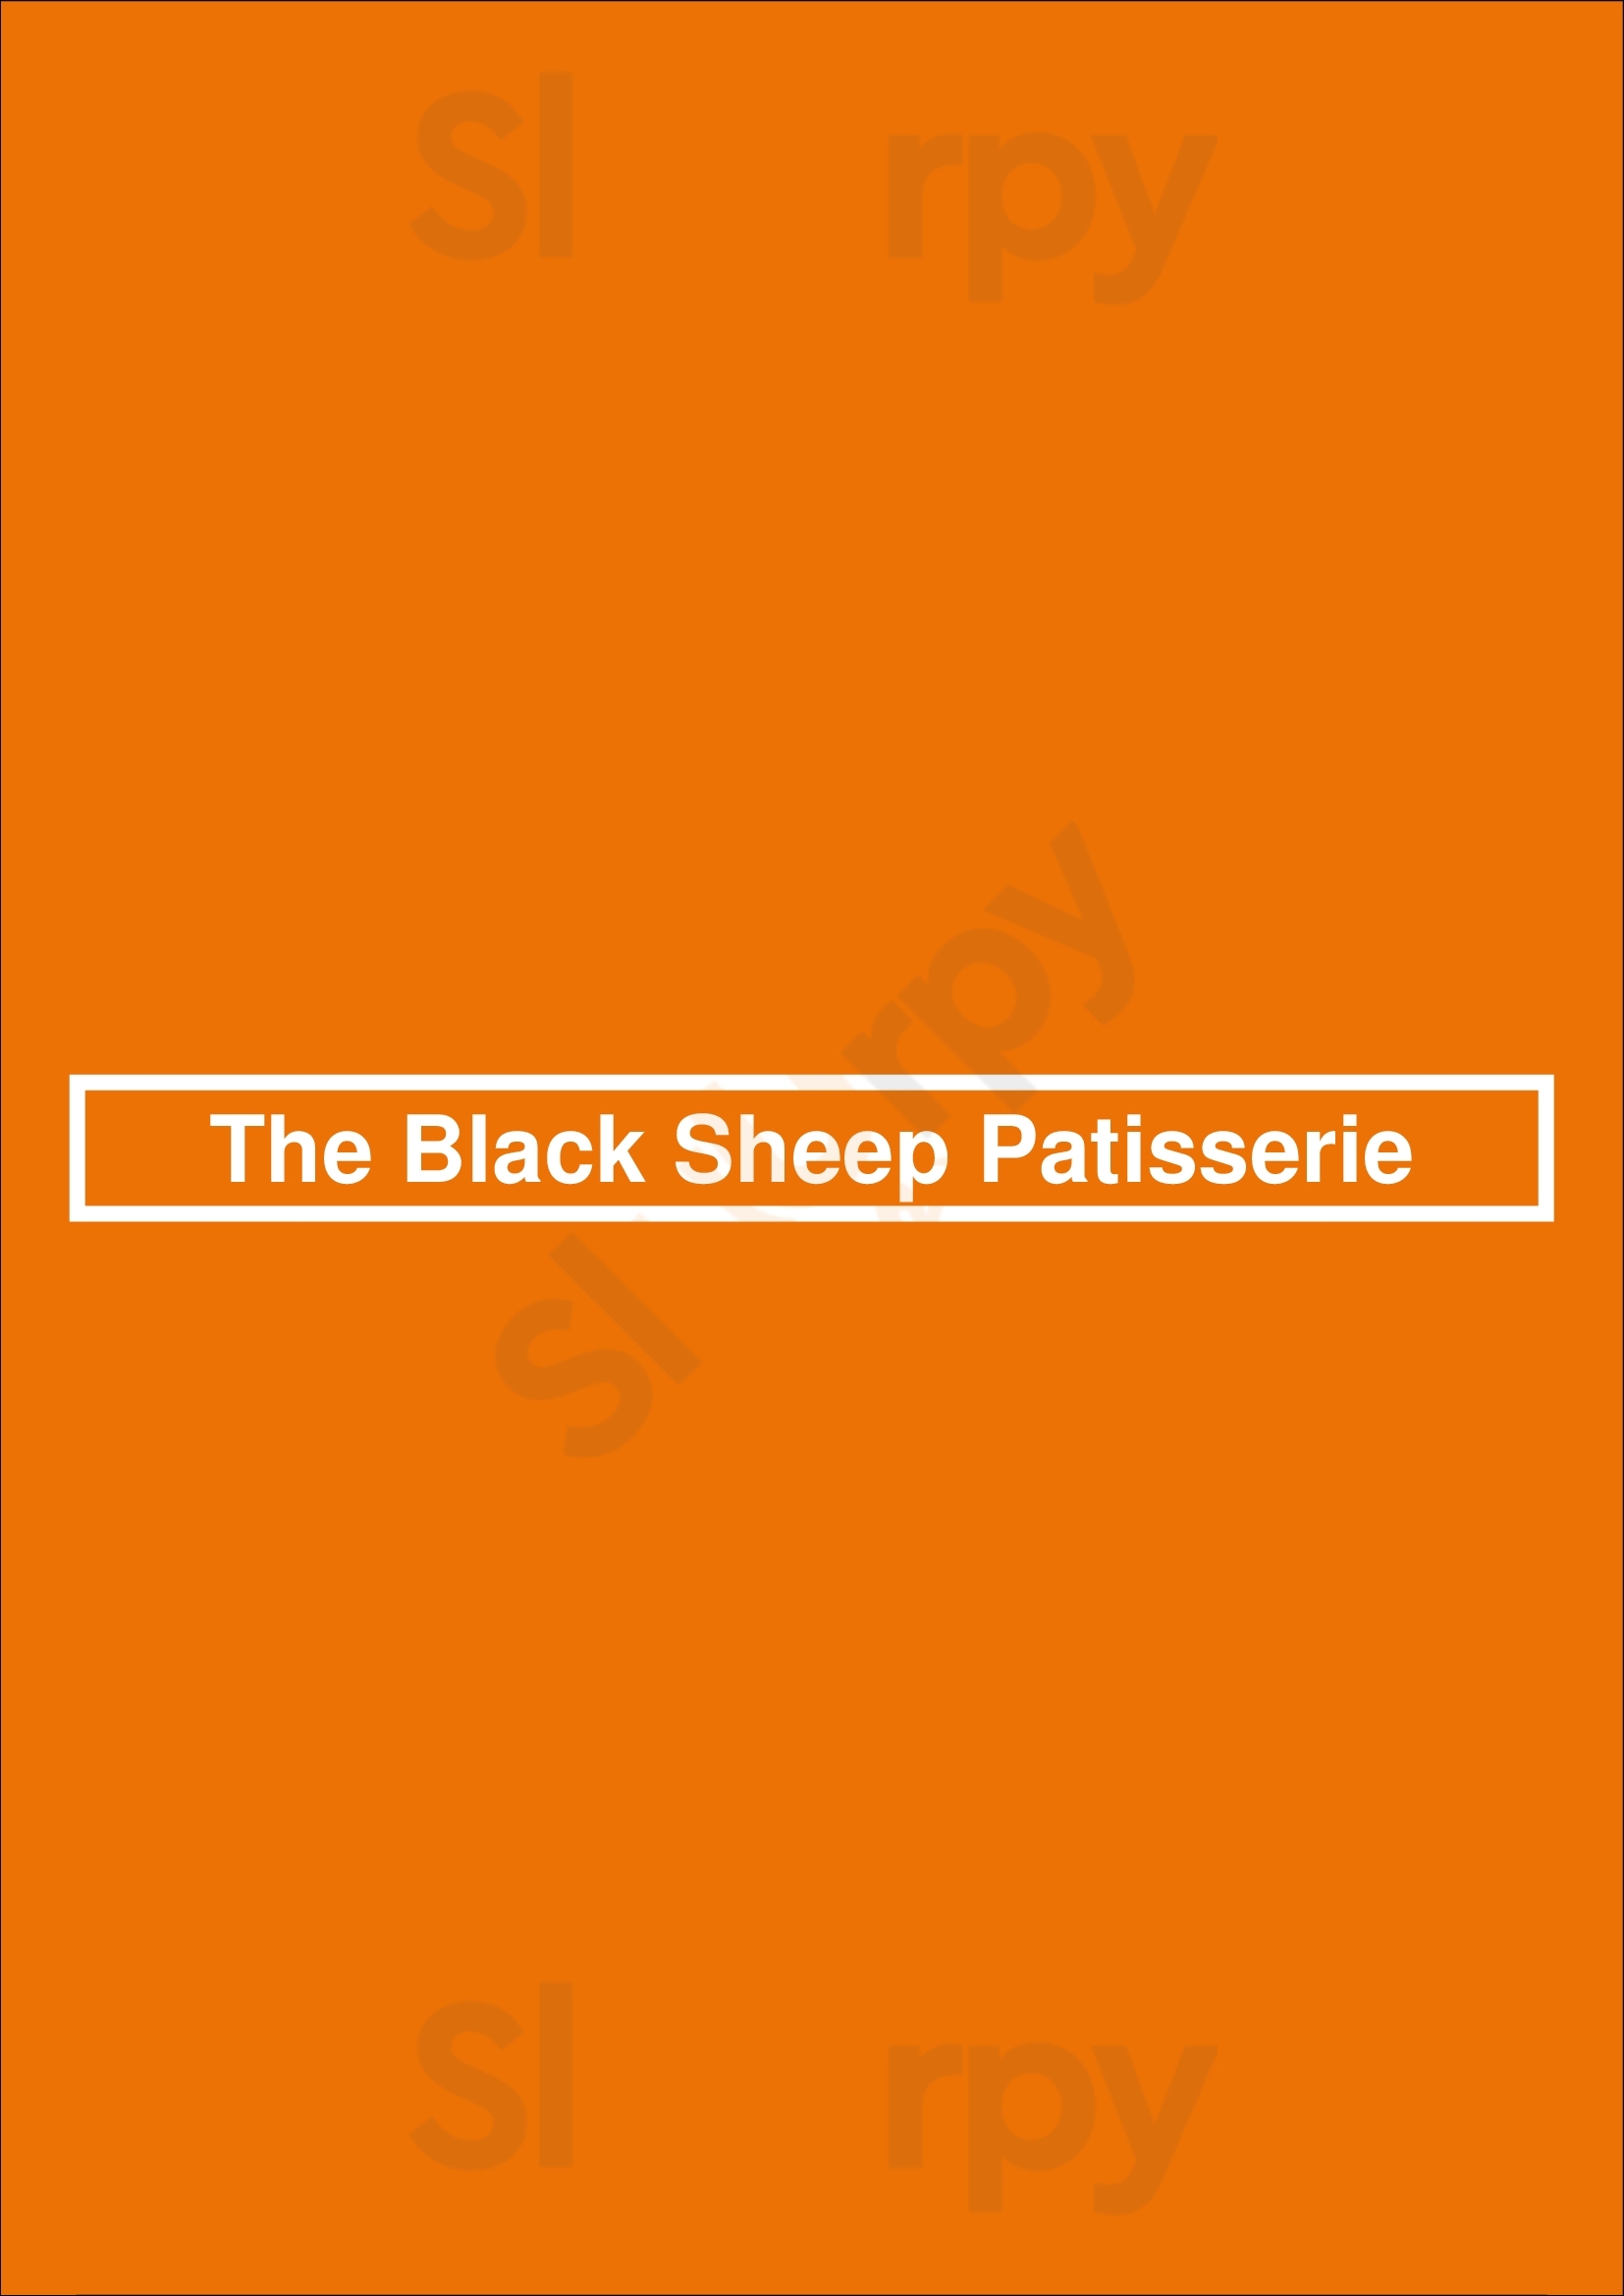 The Black Sheep Patisserie Calgary Menu - 1